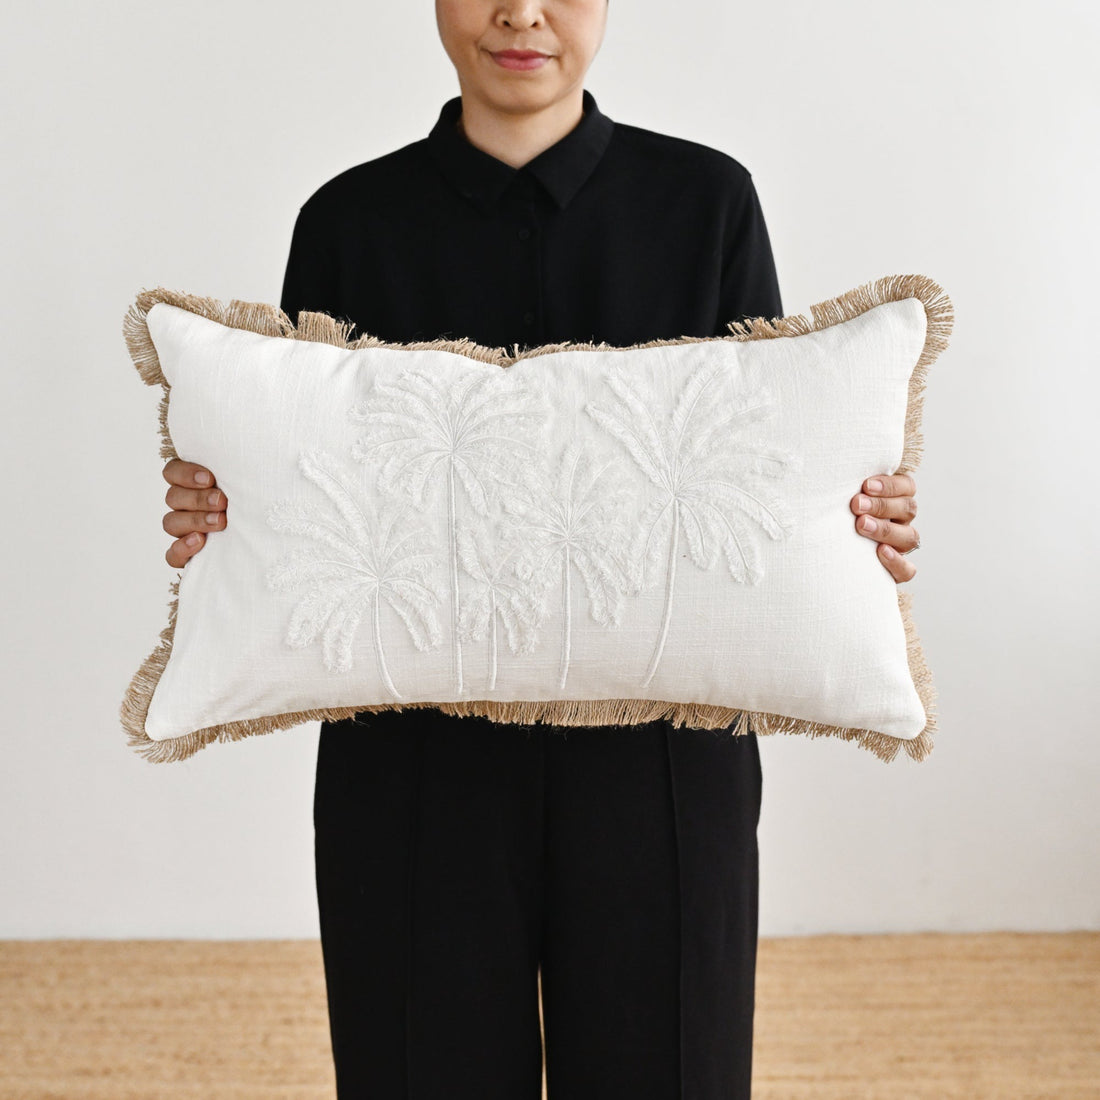 White Palm Tree Cushion - 60x35cm